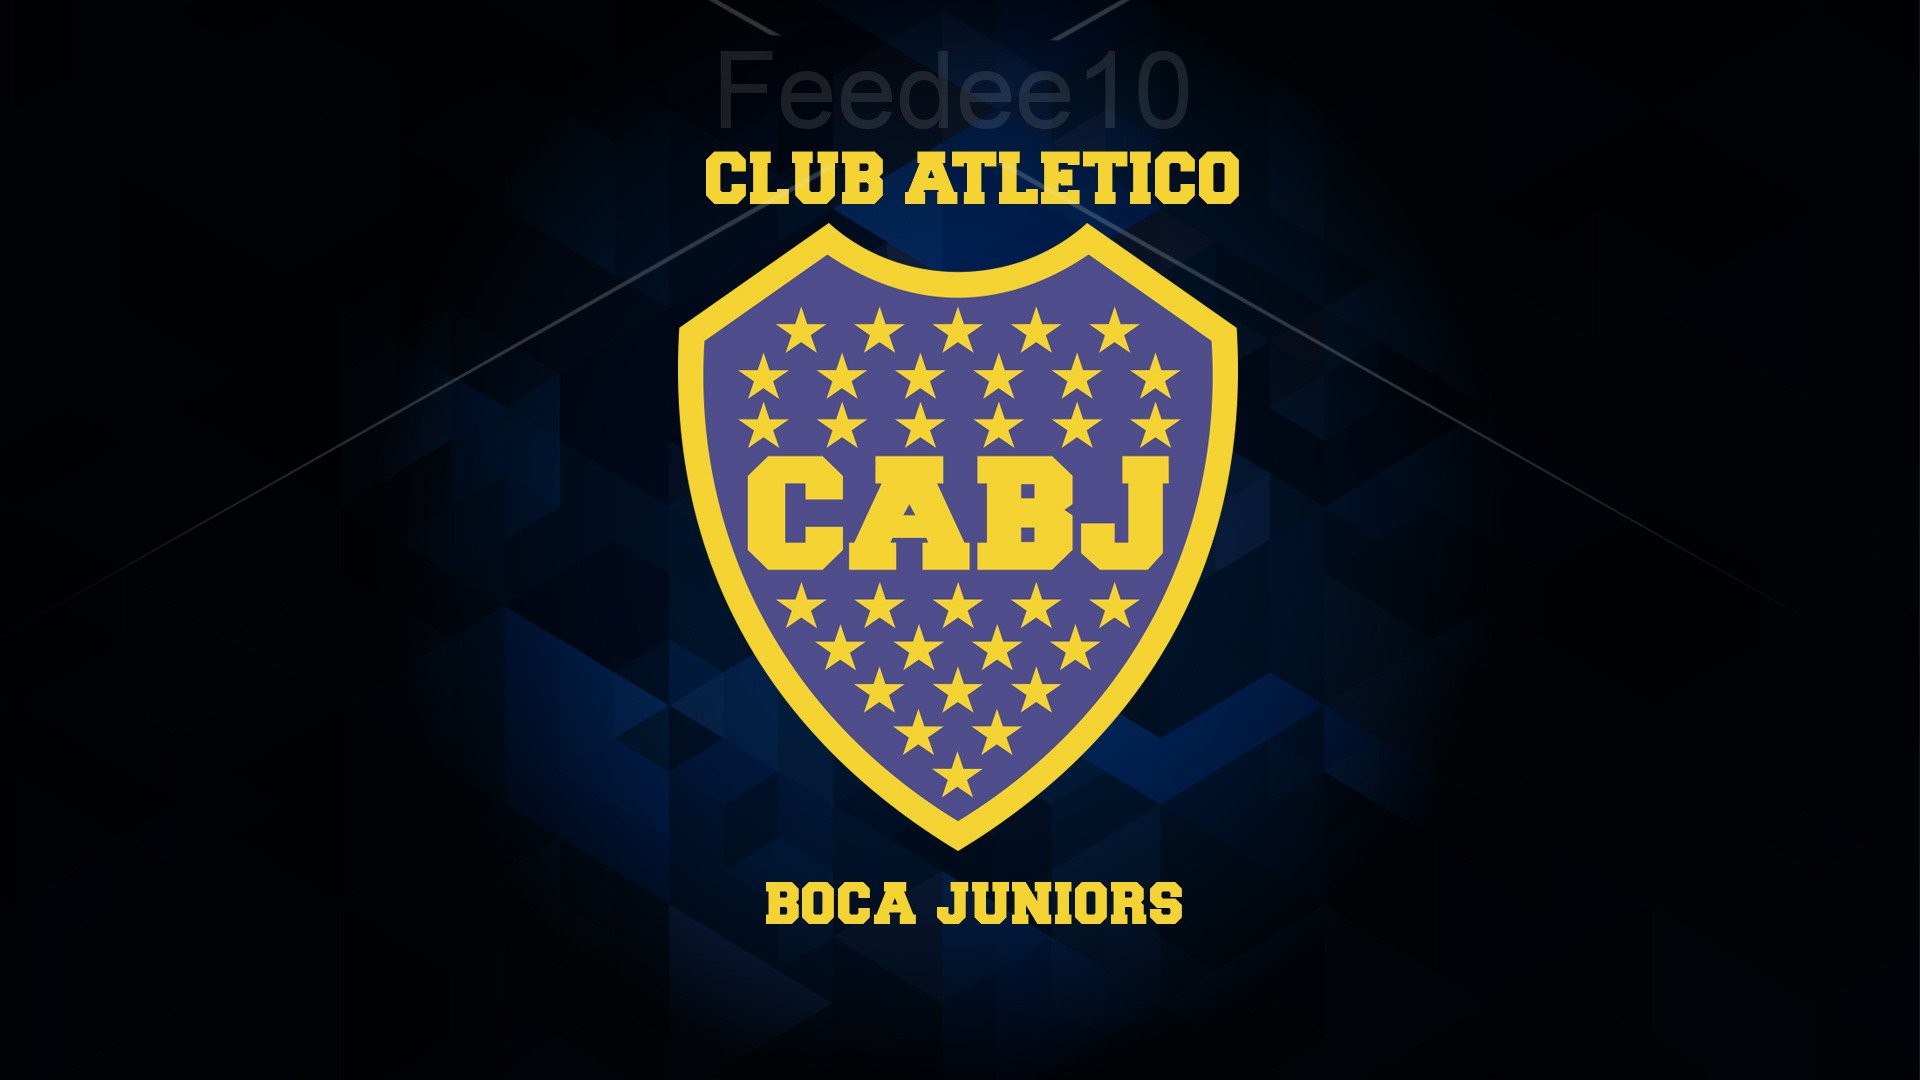 Boca Juniors HD Wallpaper Image